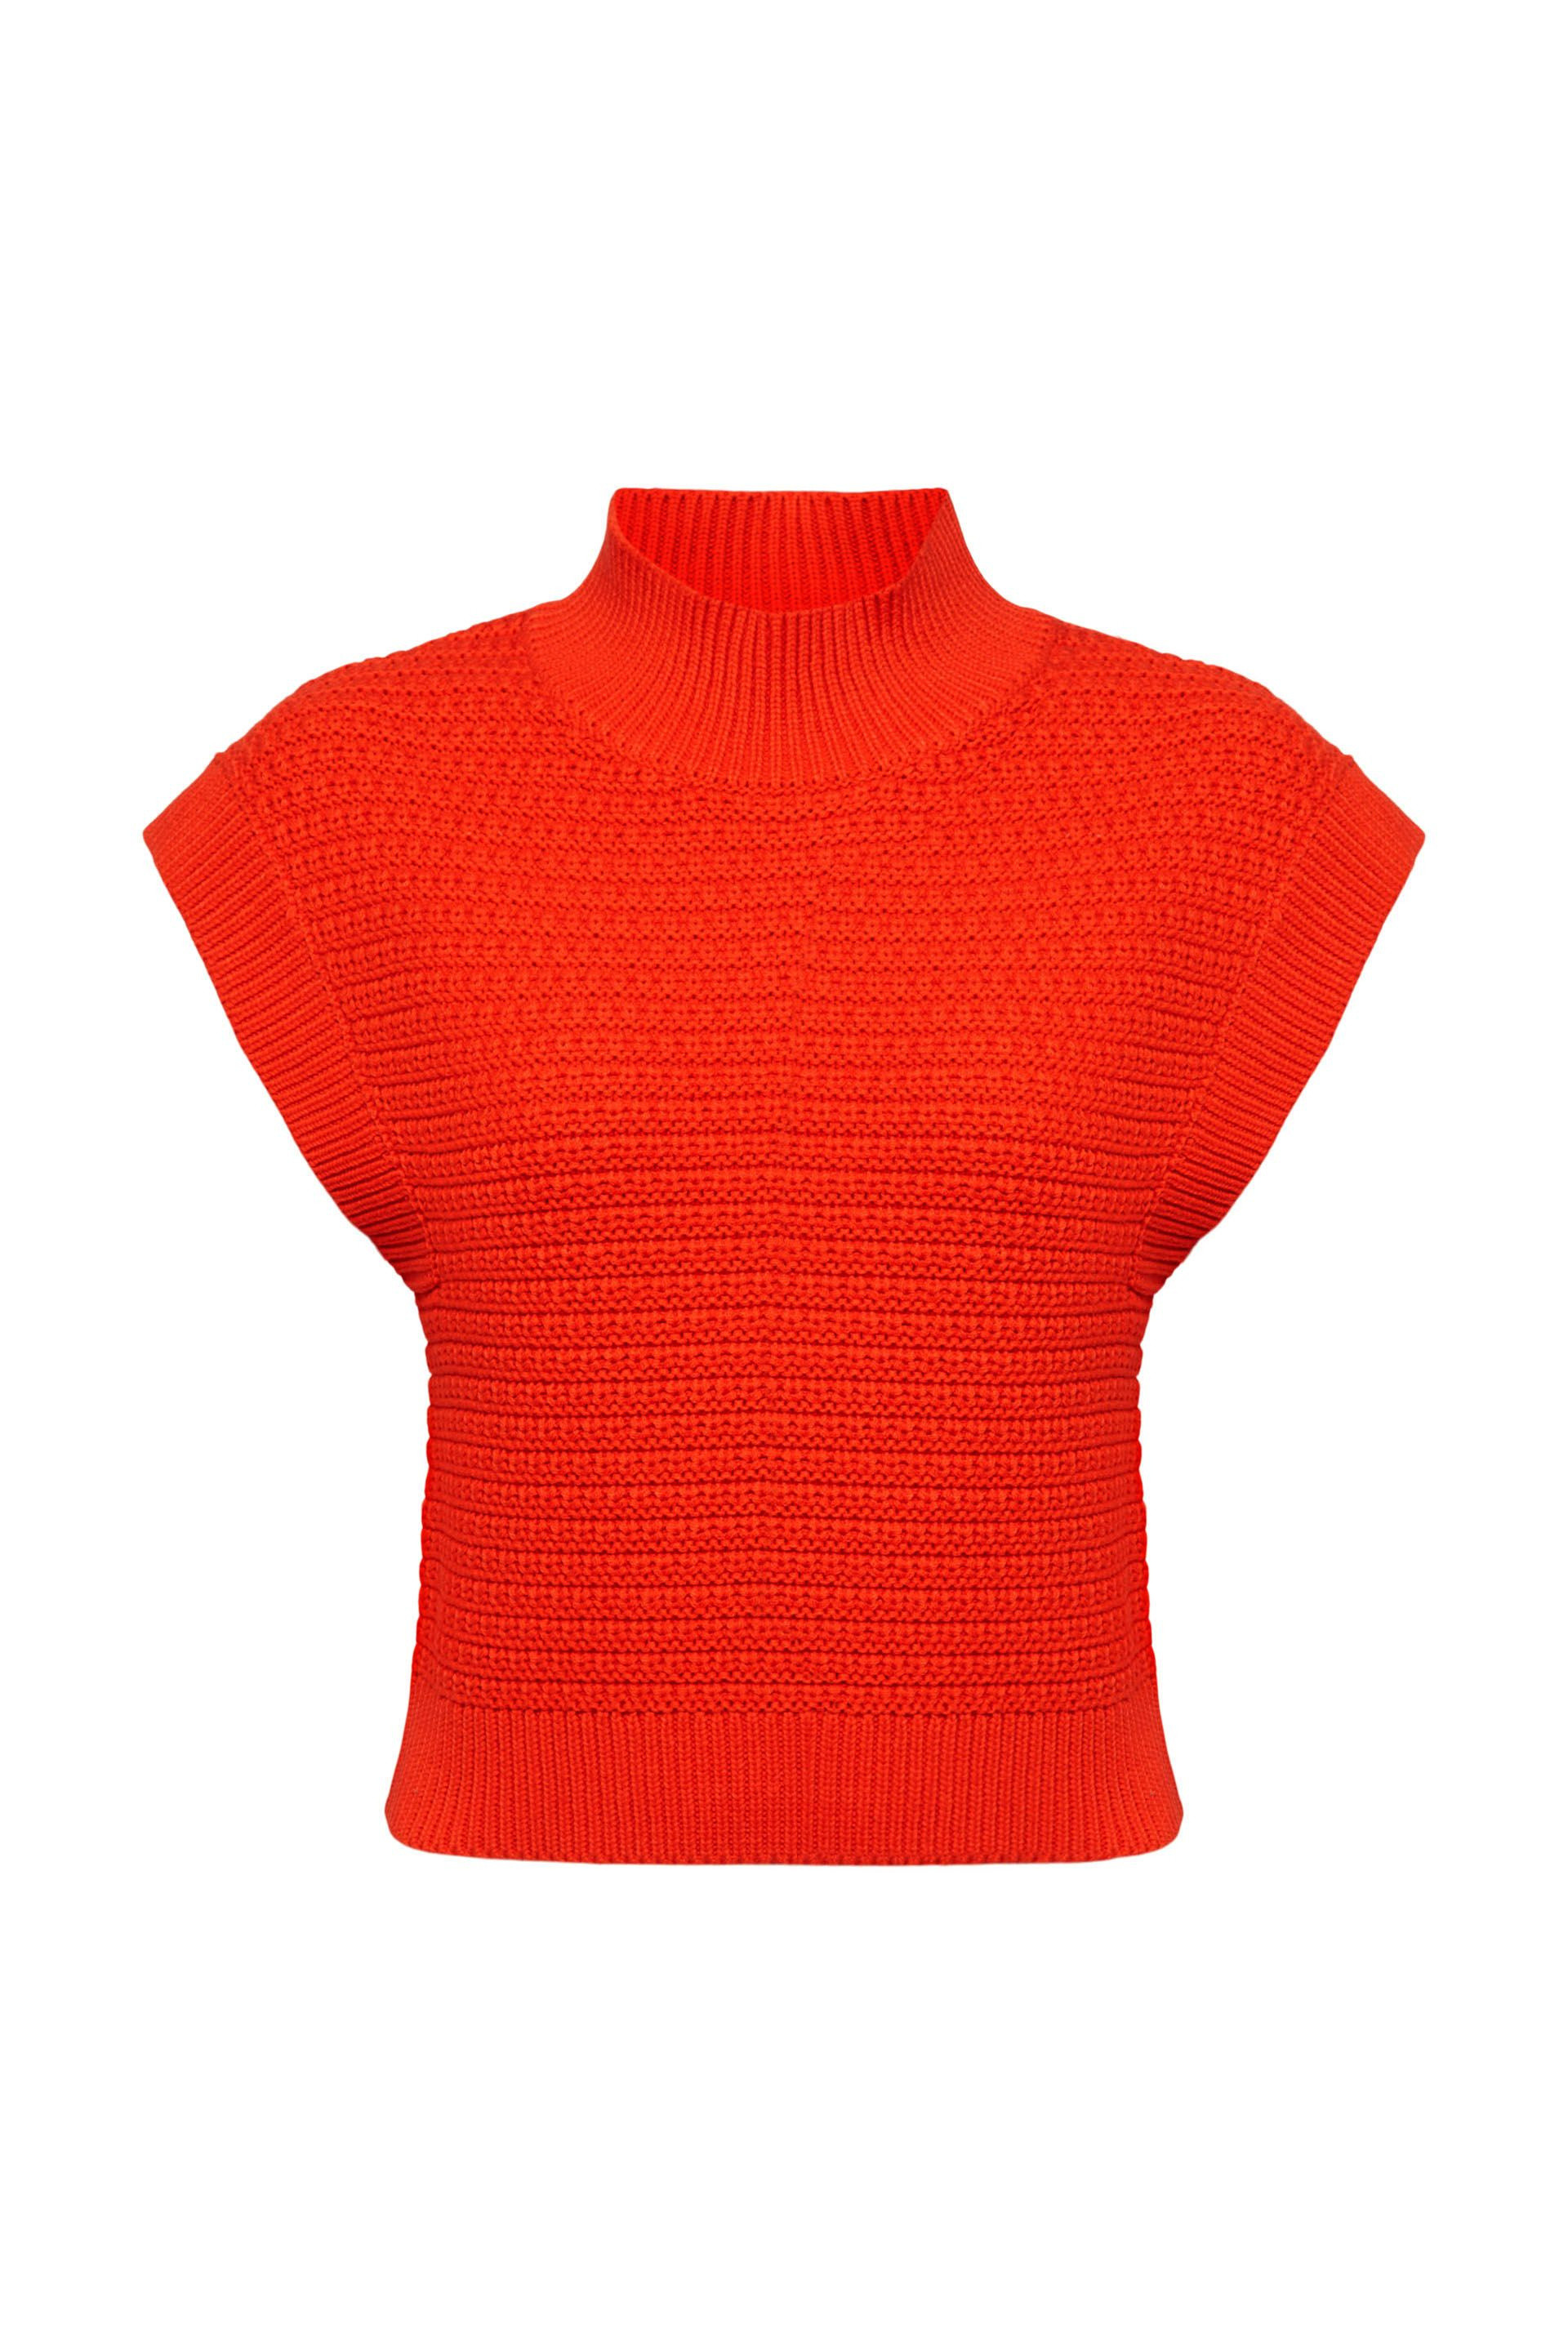 Esprit - Knitted vest in cotton blend, Red, large image number 0